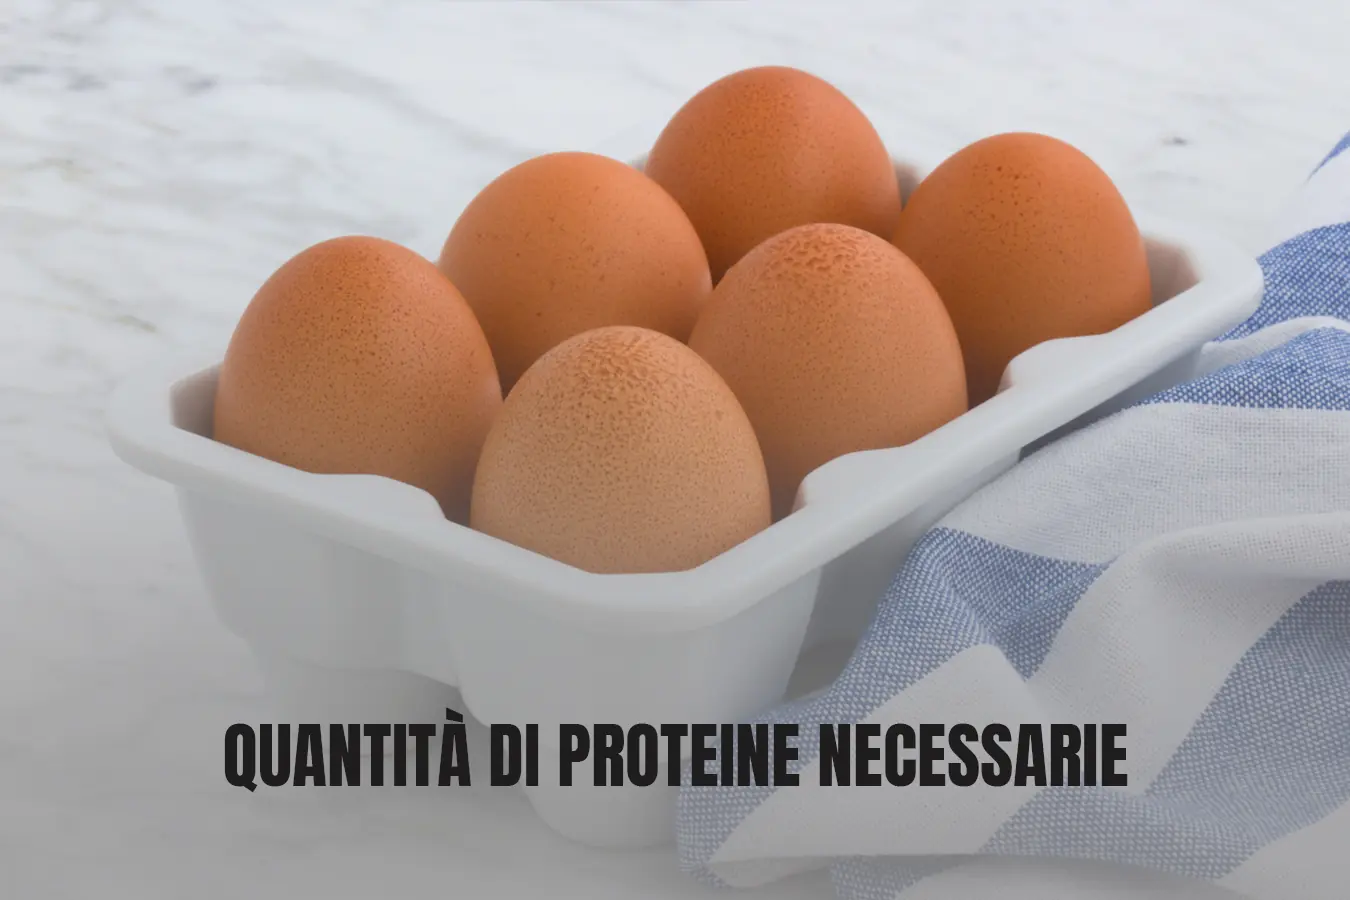 Quantità di proteine necessarie